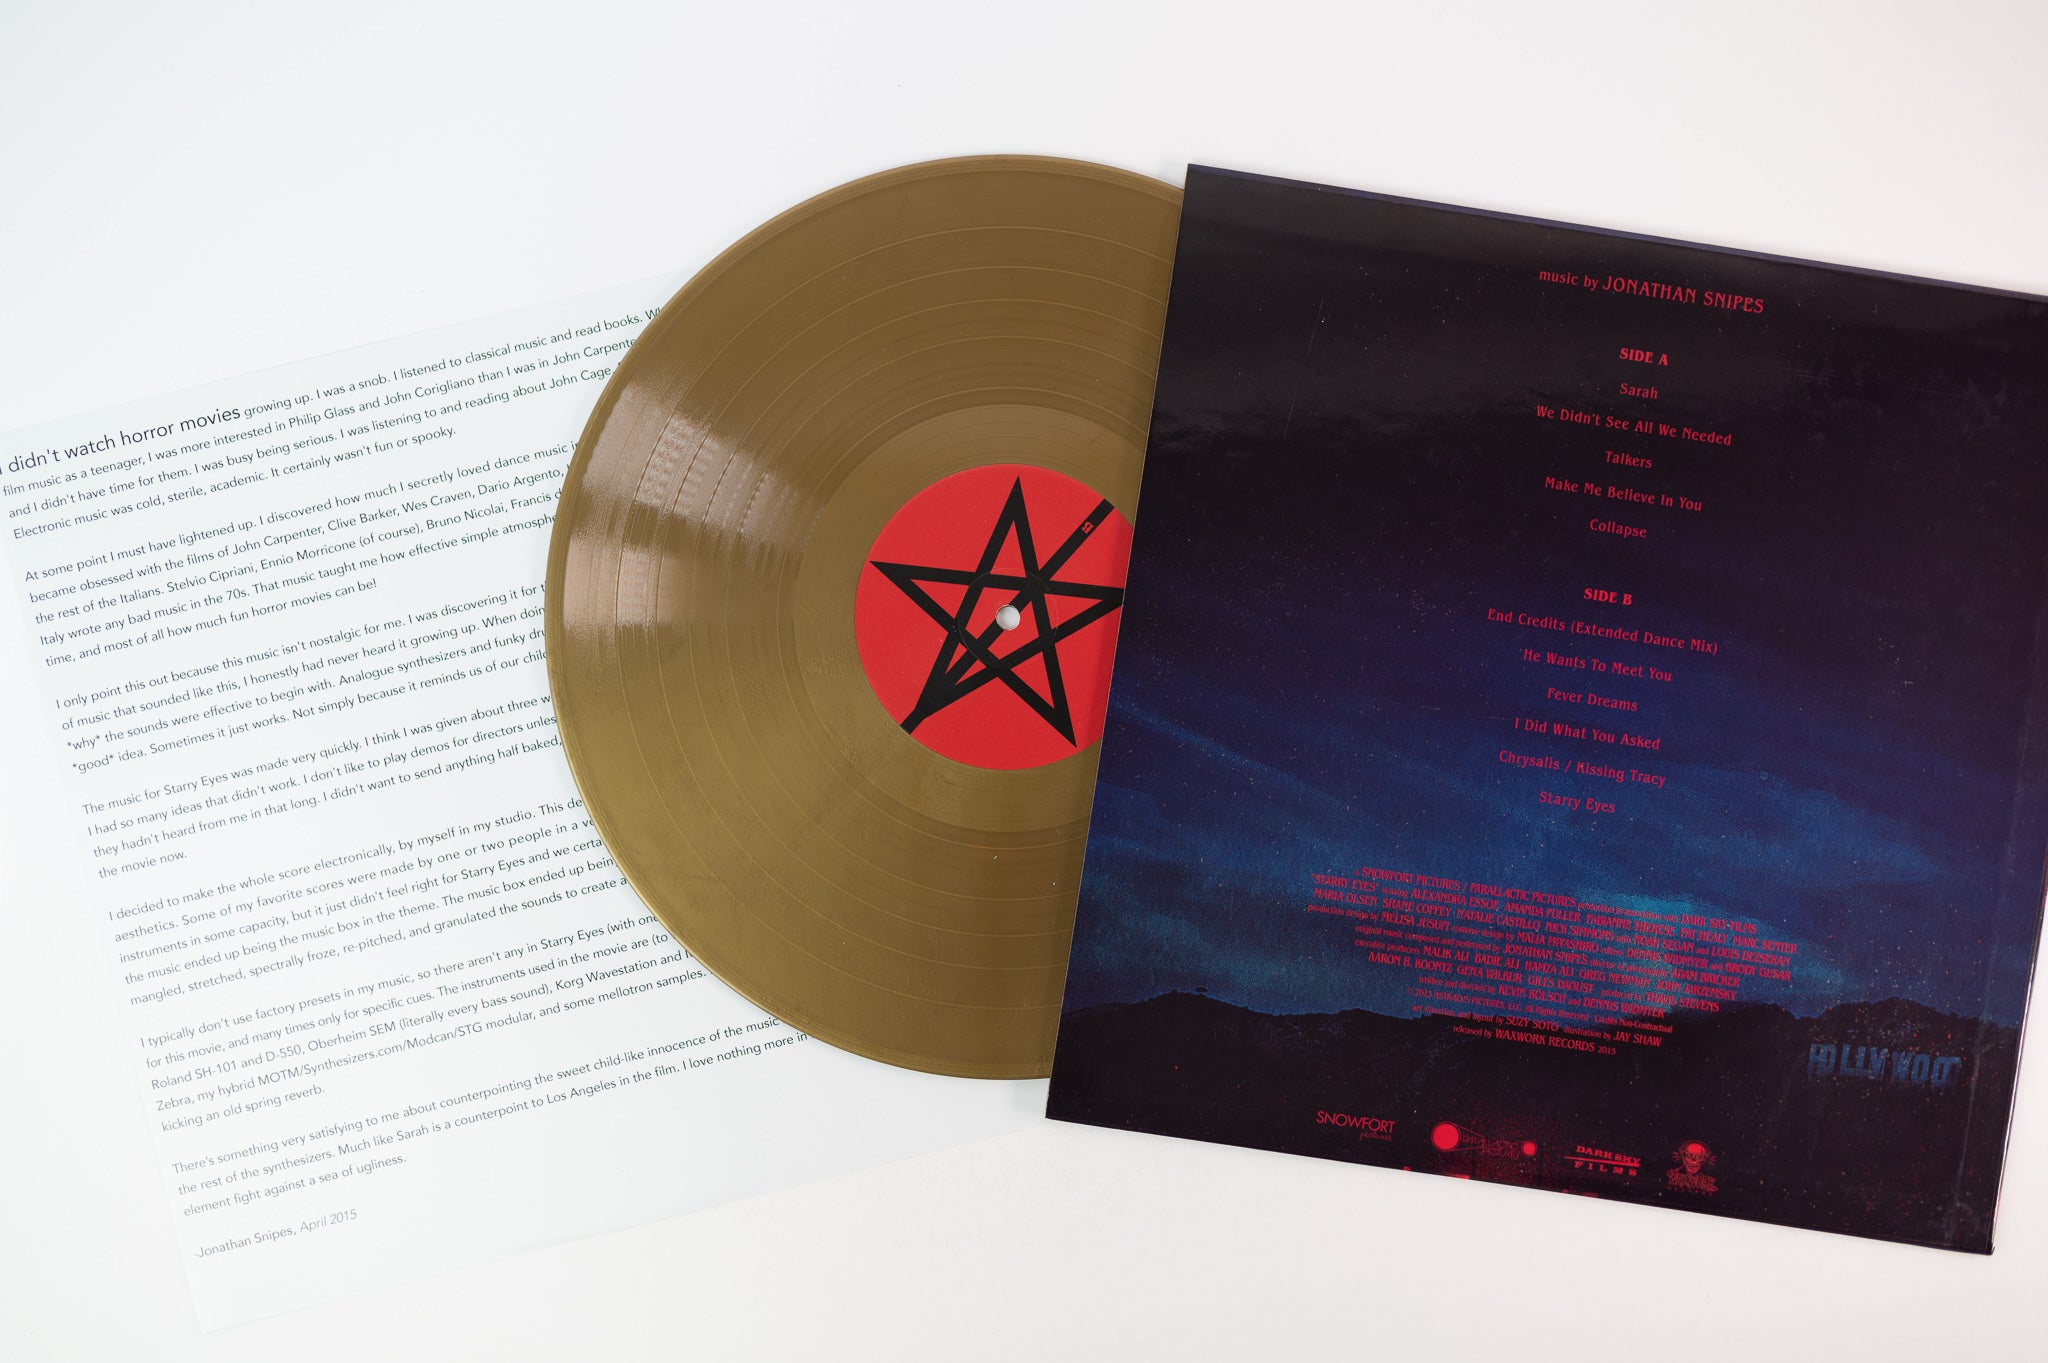 Jonathan Snipes - Starry Eyes on Waxwork Gold Metallic Vinyl